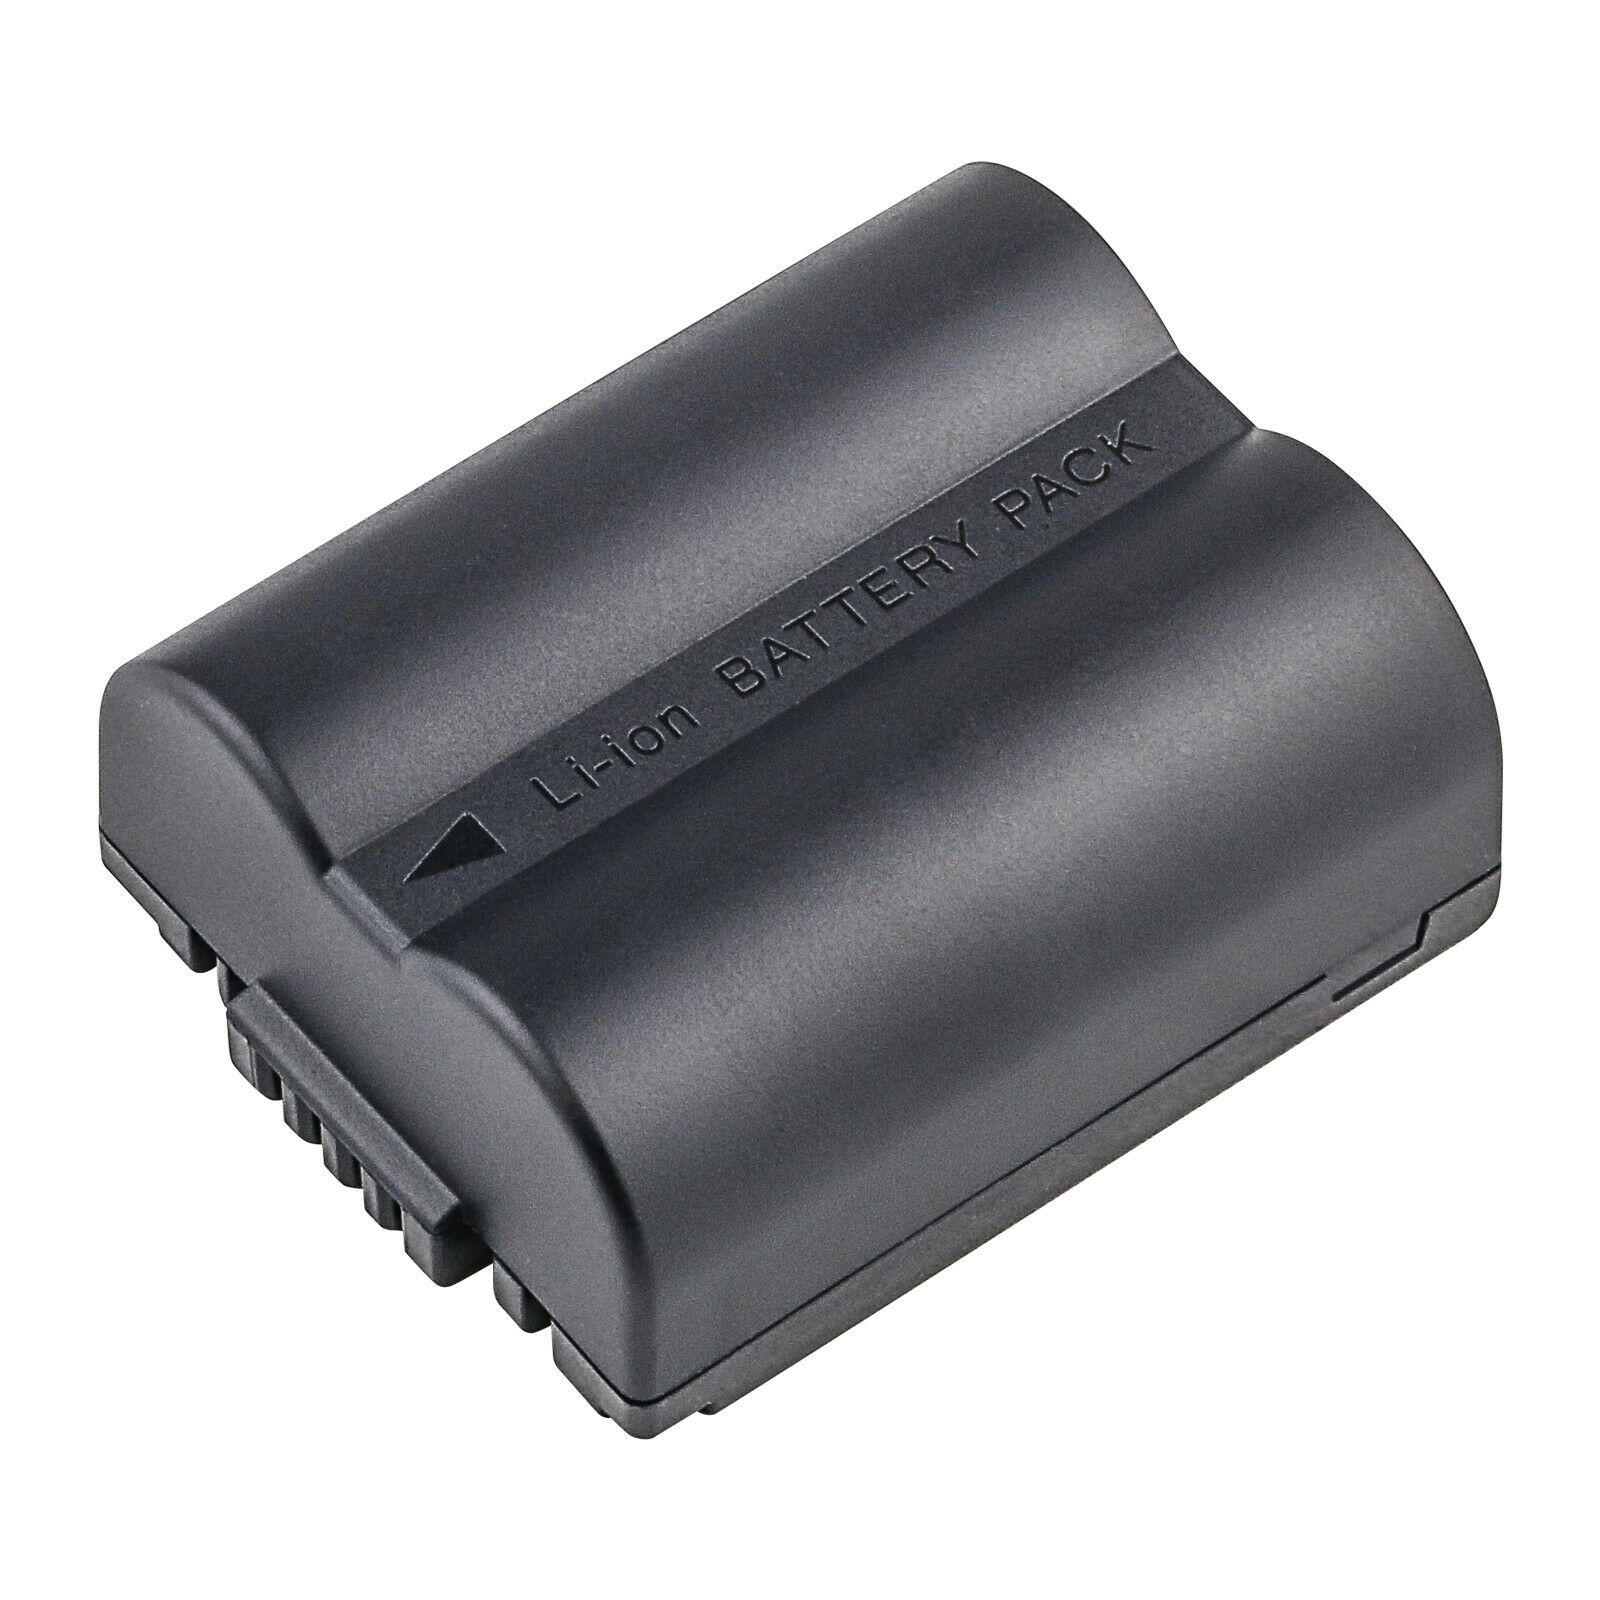 Panasonic Lumix DMC-FZ18 Camera Battery